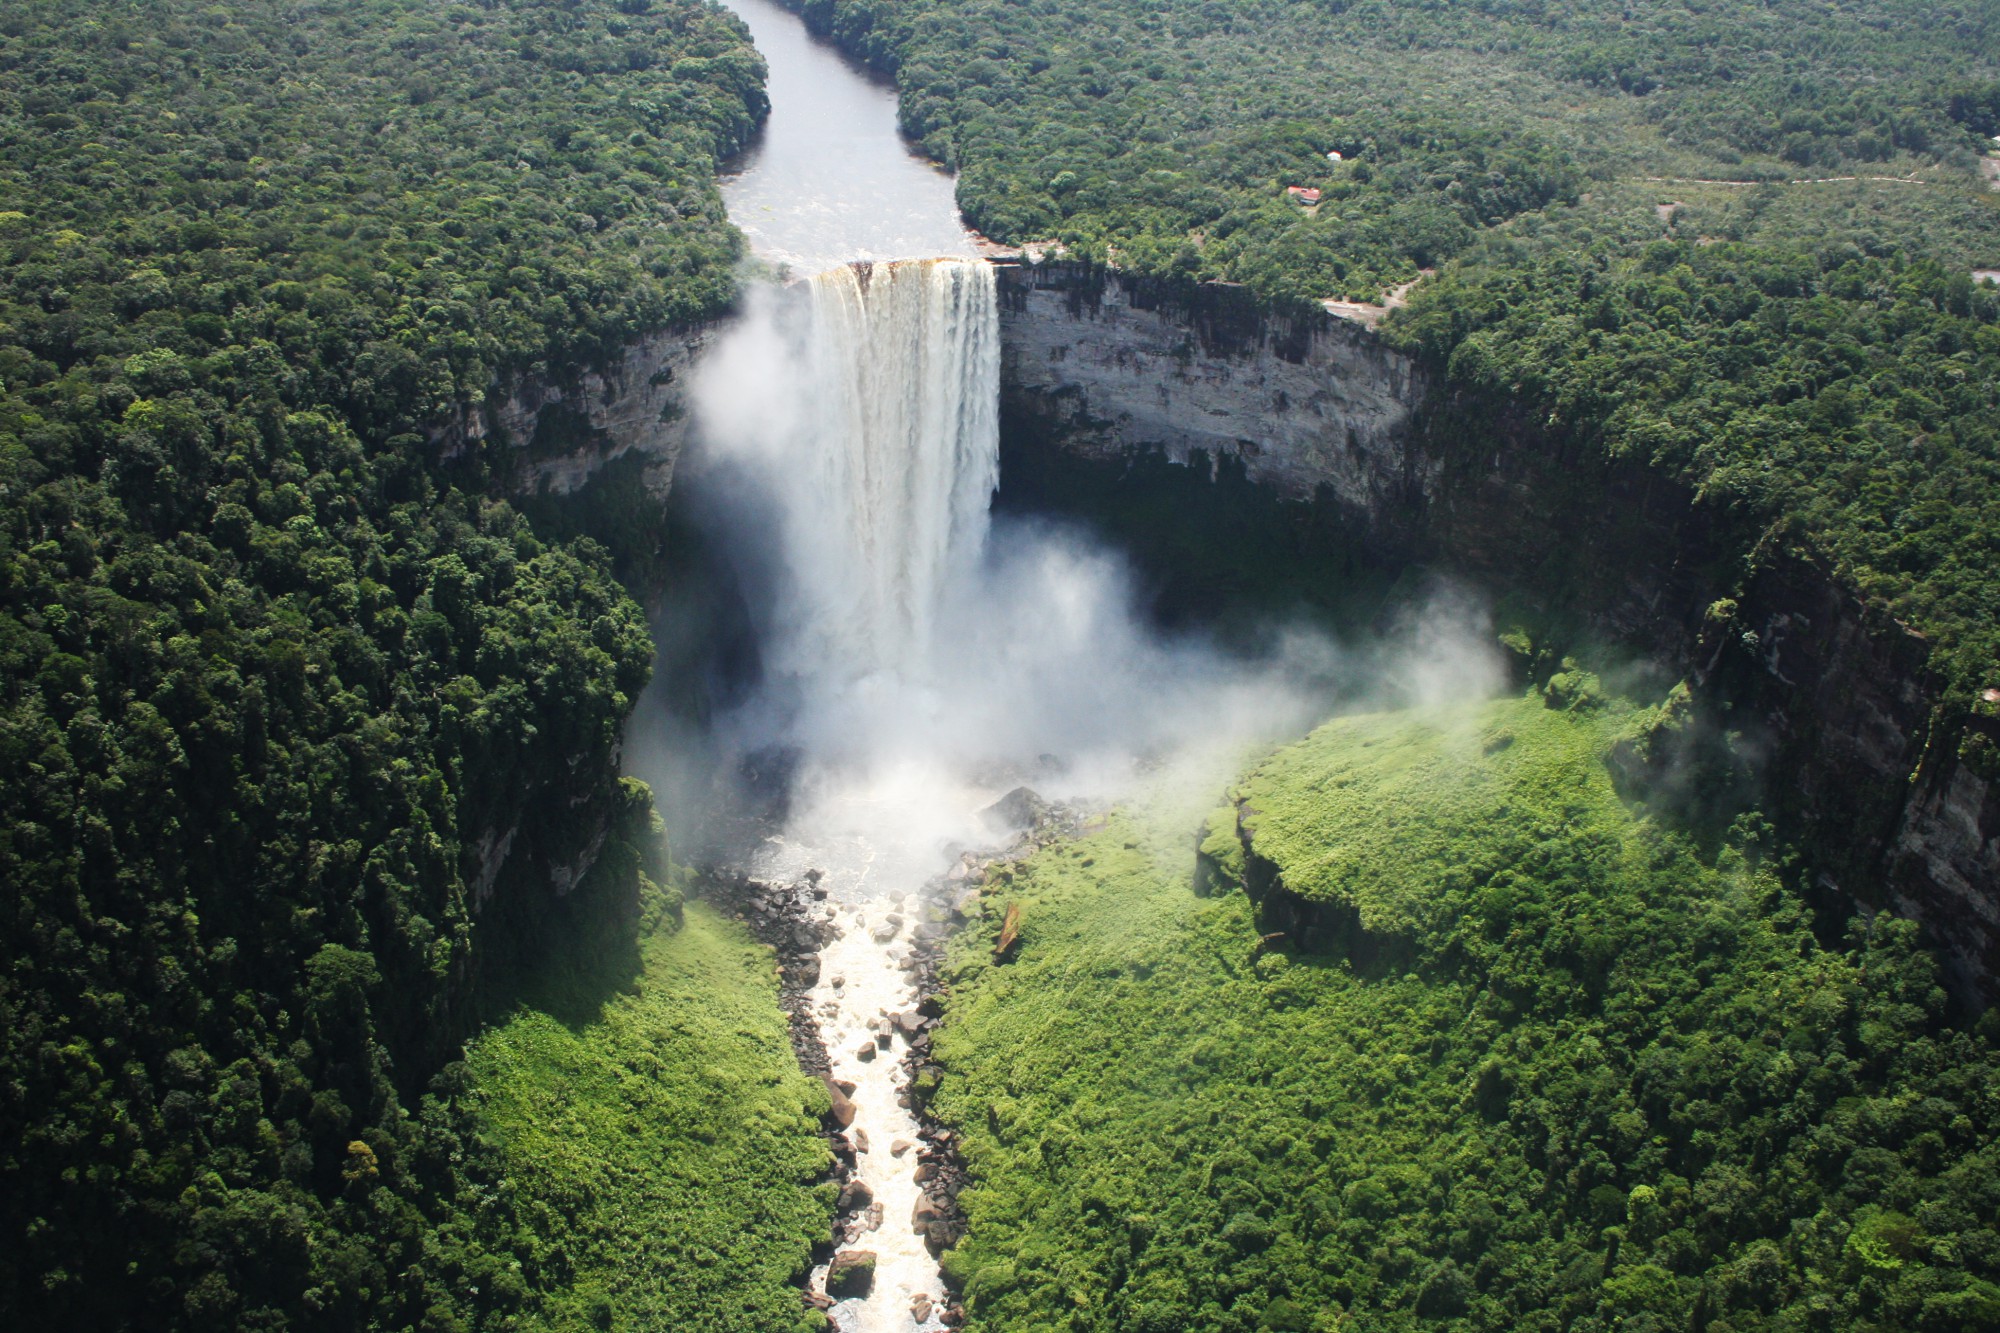 Let pronajatým letadélkem ke skrytým drahokamům guyanské přírody -vodopádům Kaieteur Falls